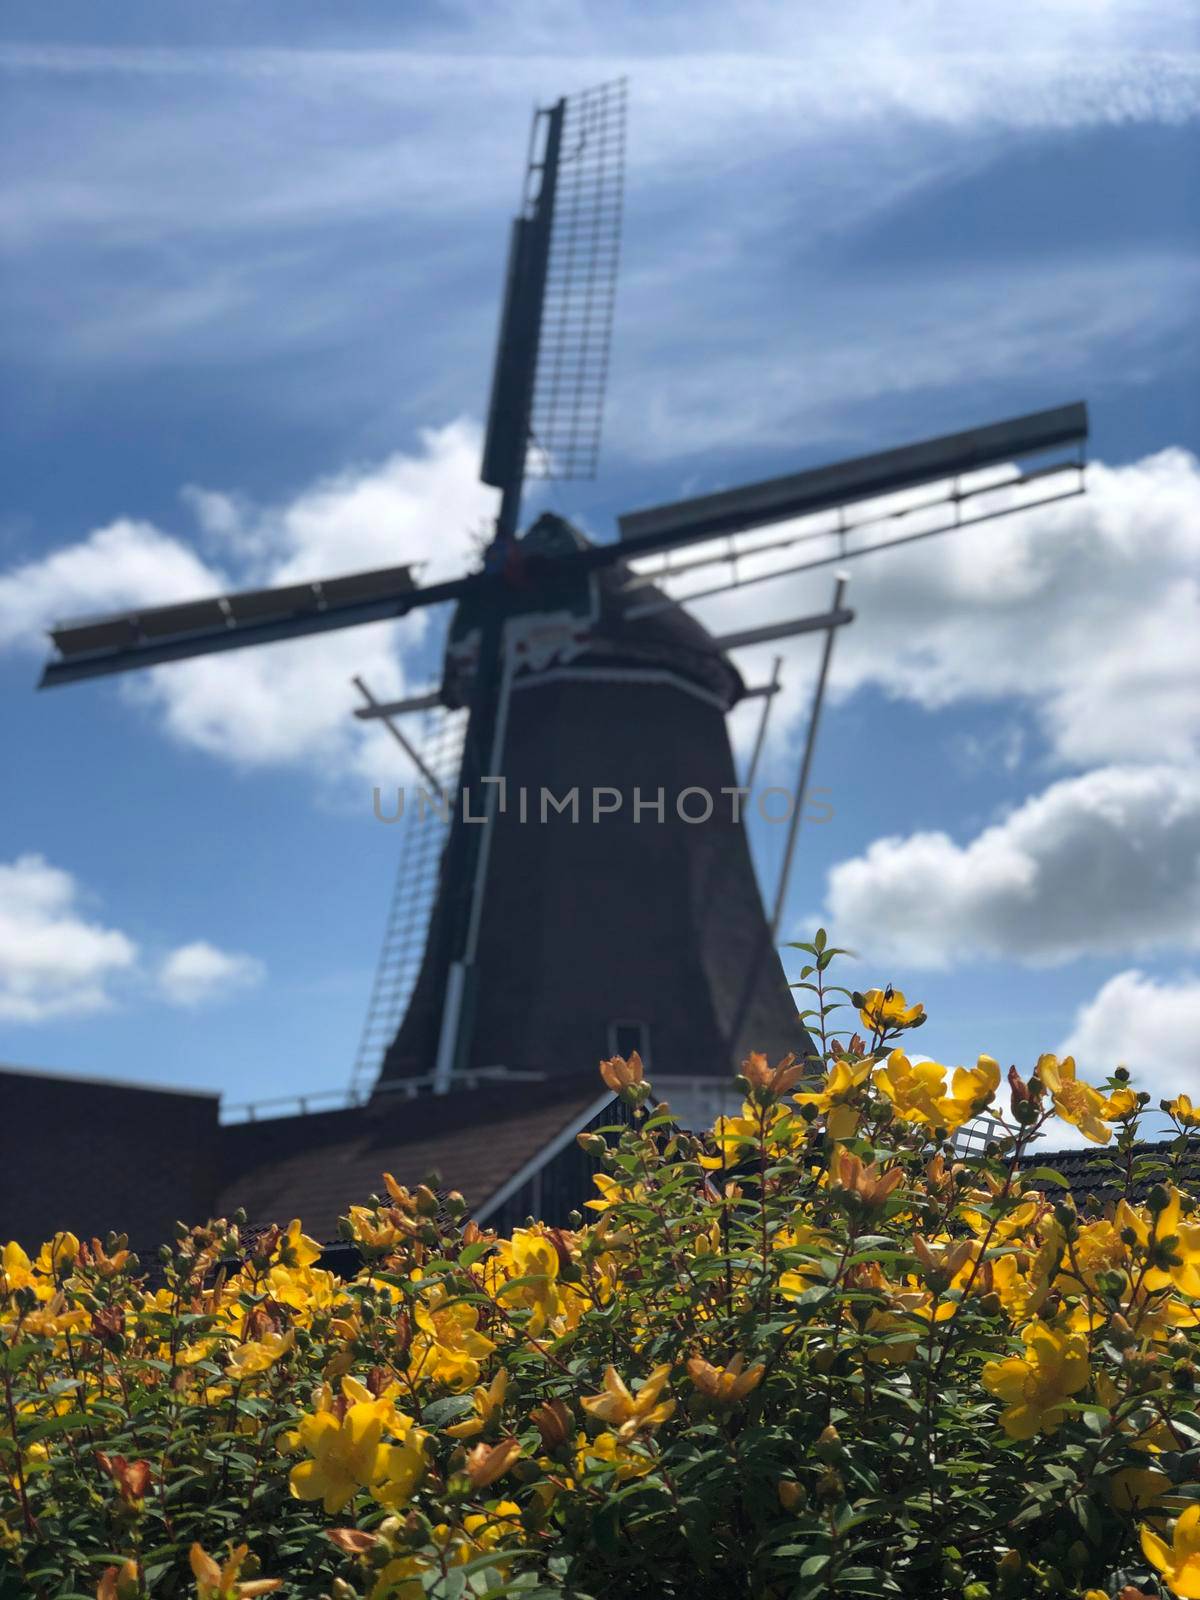 Windmill in Stiens, Friesland The Netherlands